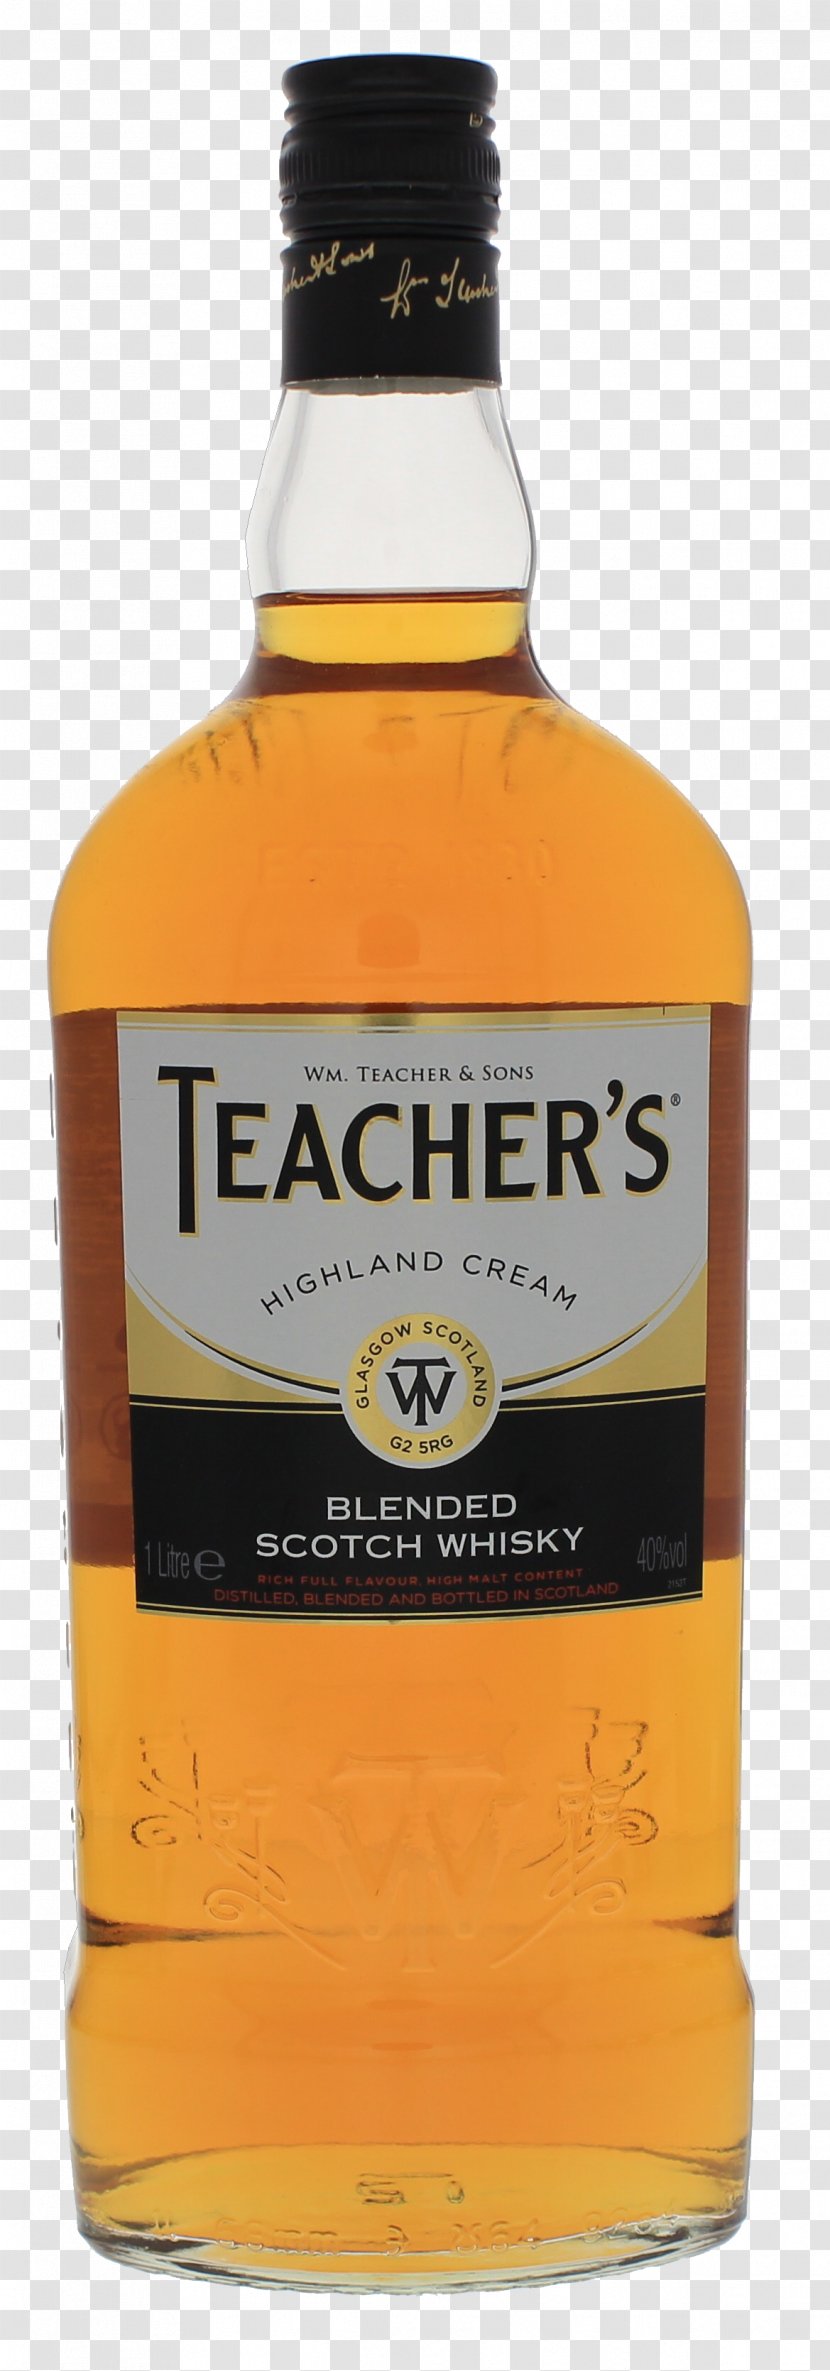 Tennessee Whiskey Scotch Whisky Blended Distilled Beverage - Bottle Transparent PNG